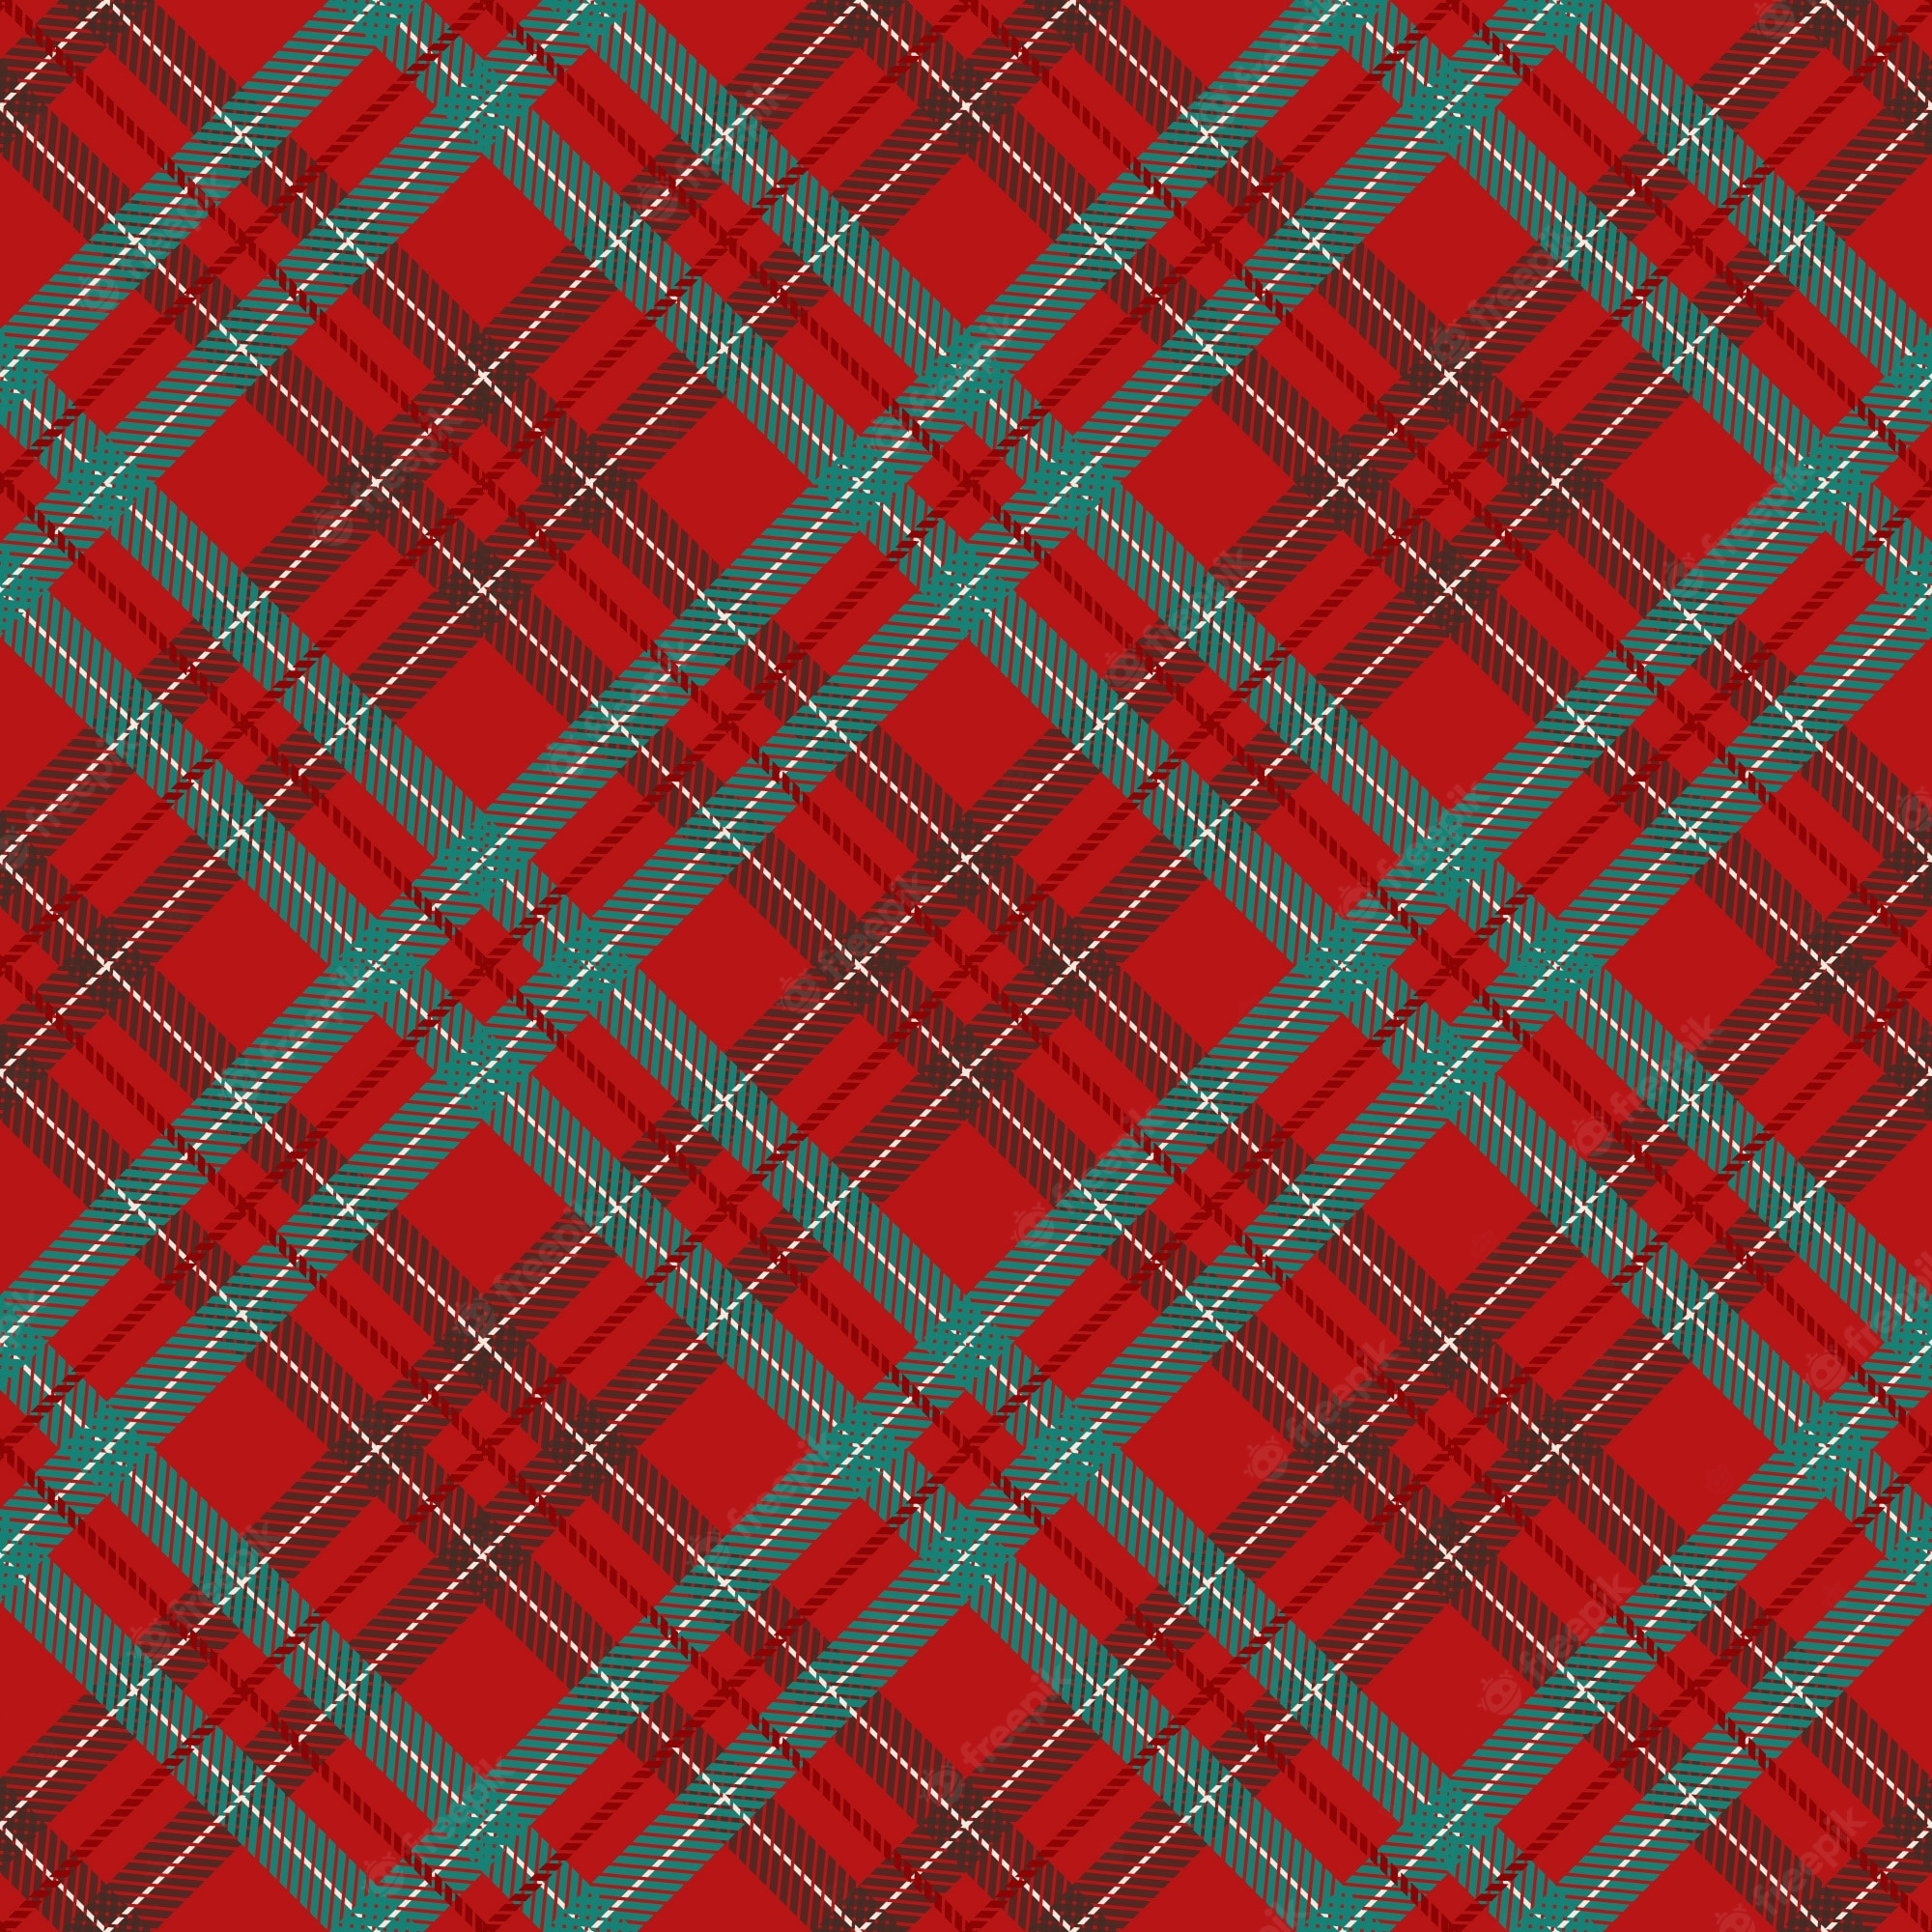 Year tartan pattern scottish cage Royalty Free Vector Image